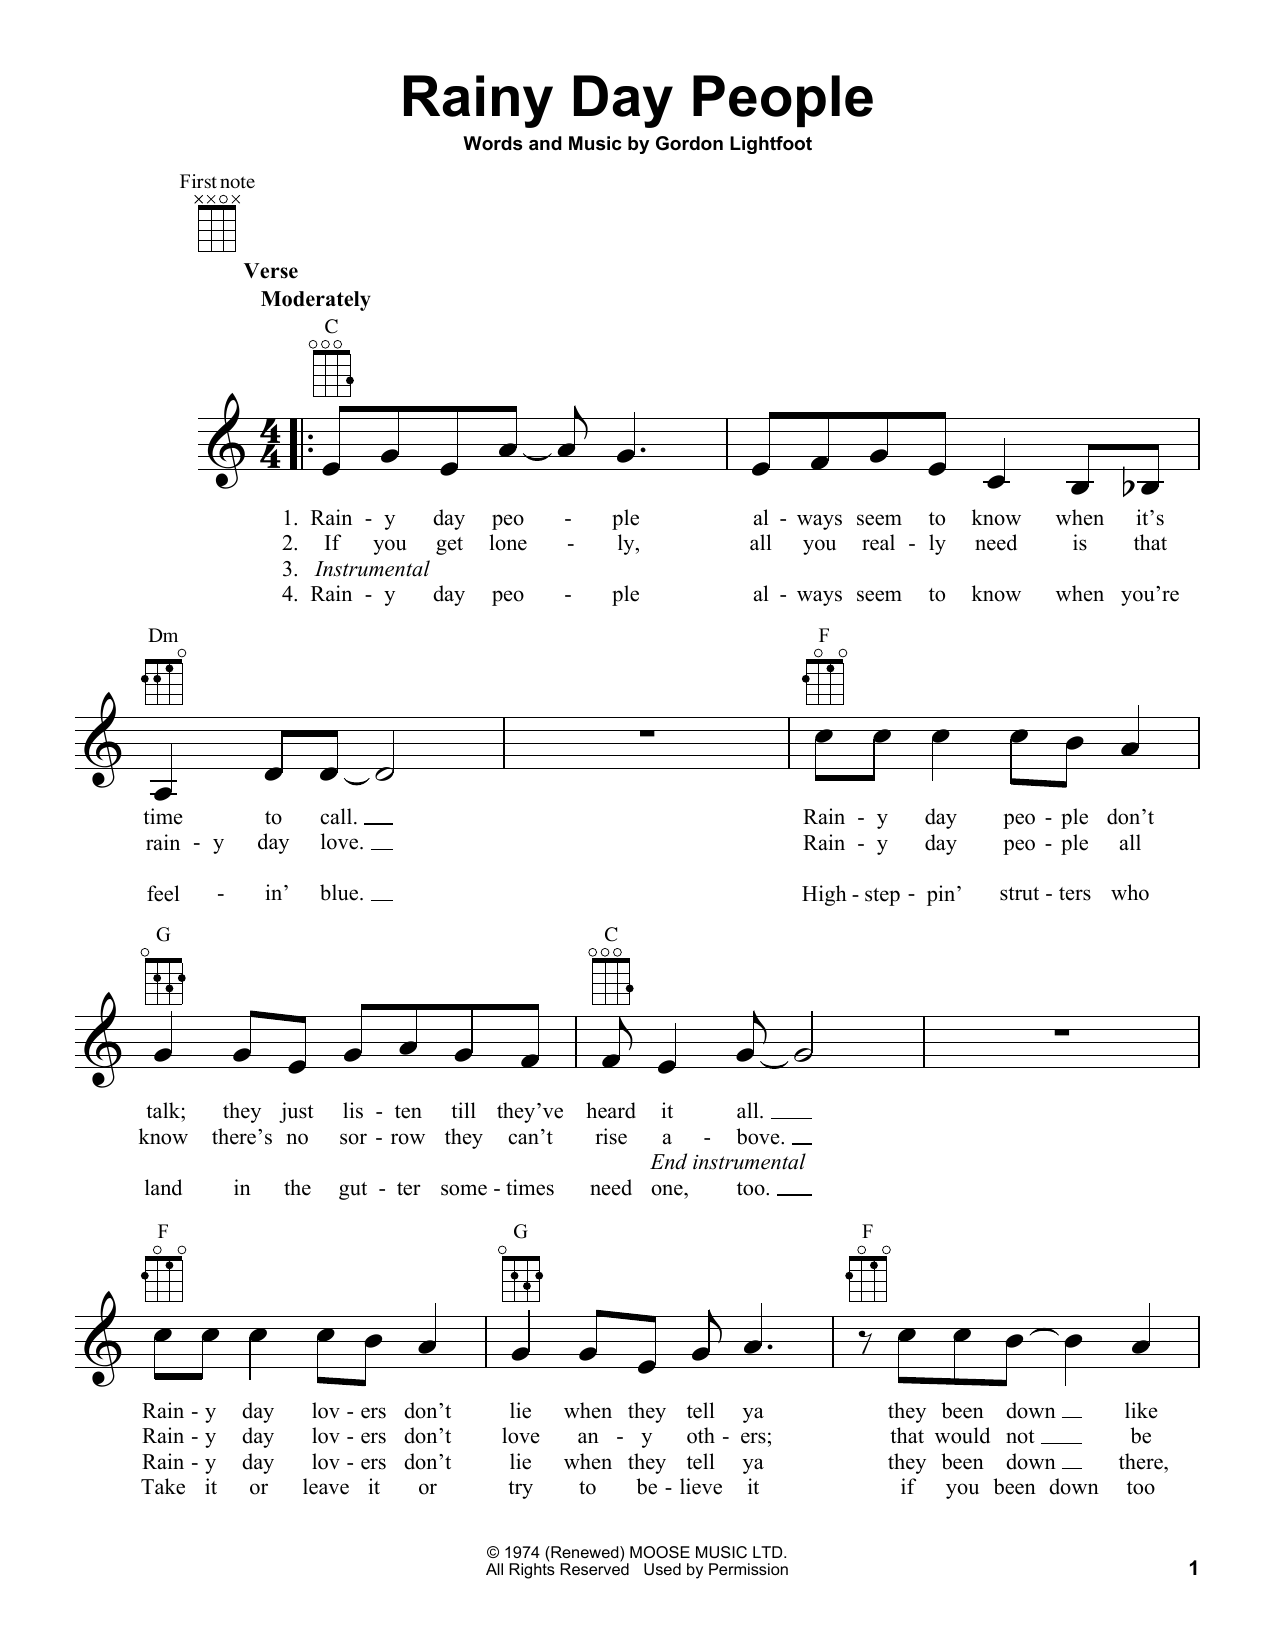 Gordon Lightfoot Rainy Day People Sheet Music Notes & Chords for Ukulele - Download or Print PDF